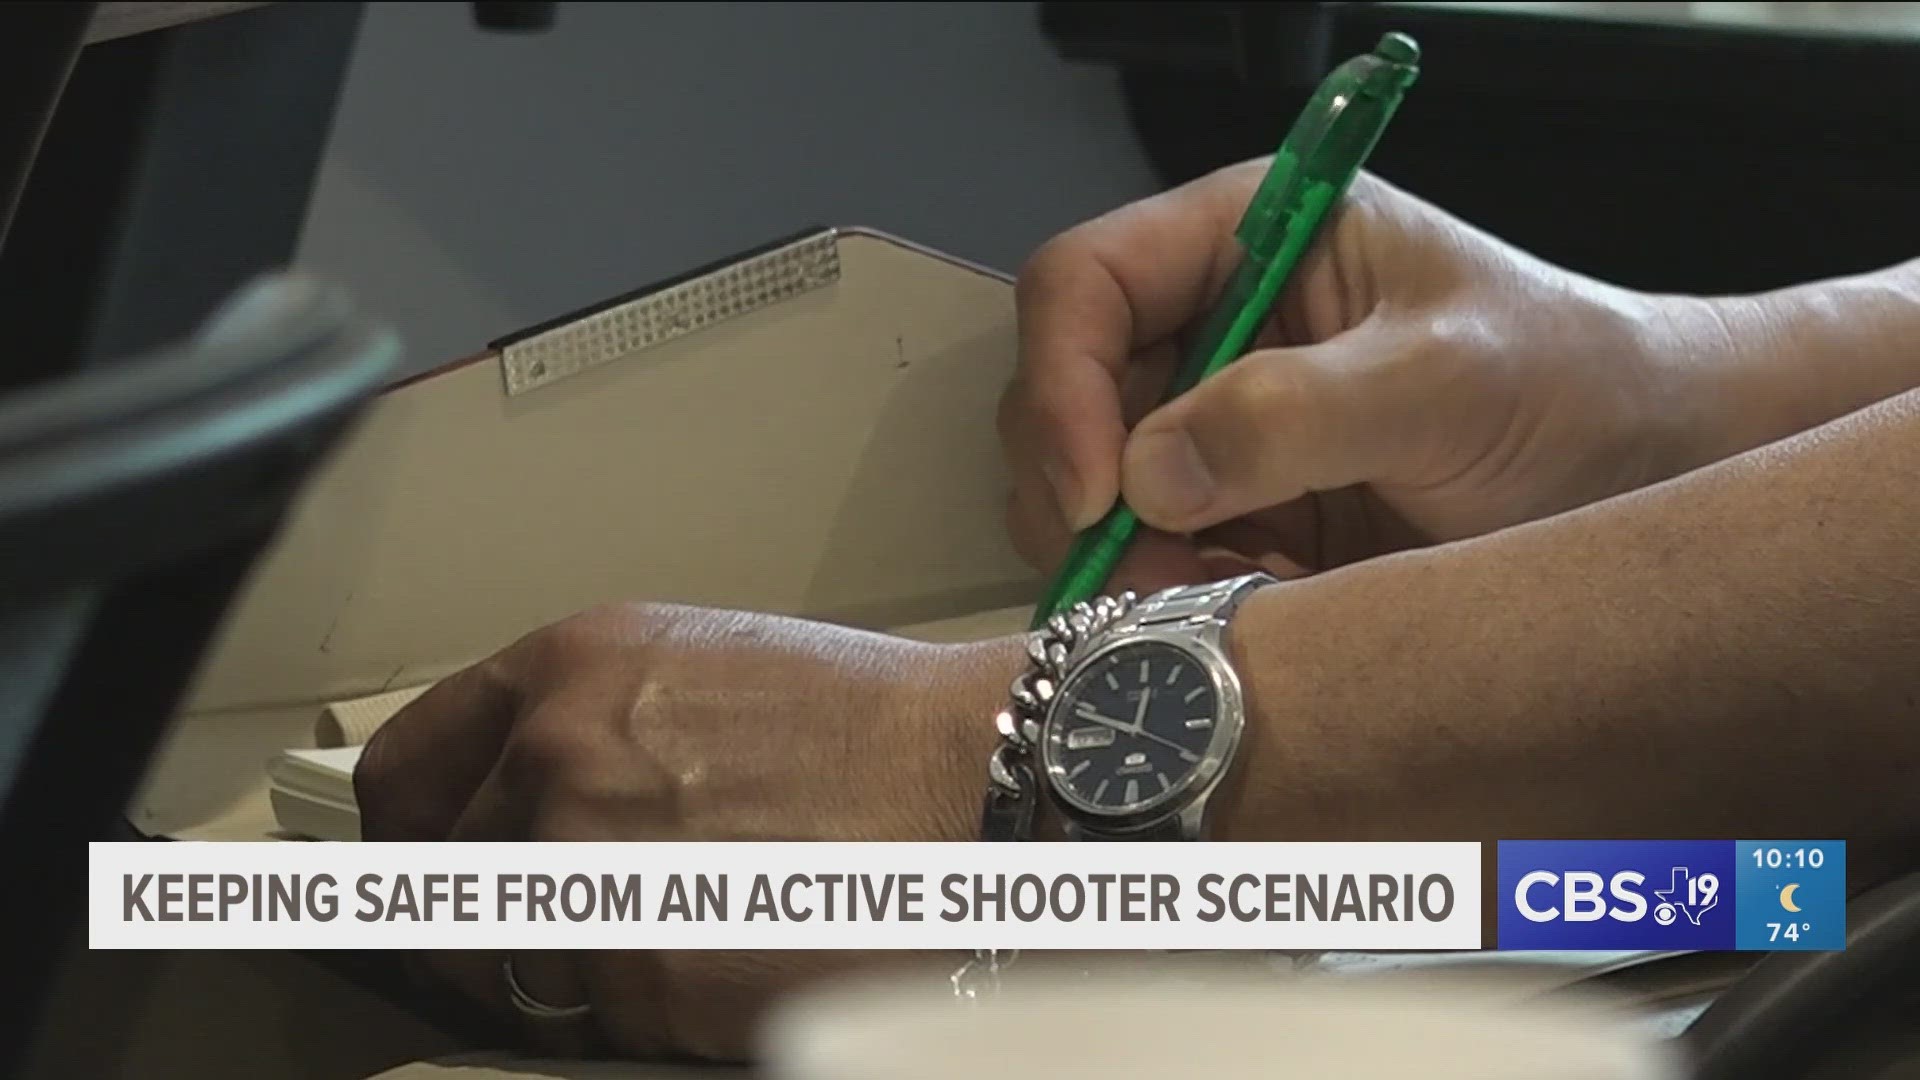 Local organization provides information on surviving an active shooter scenario